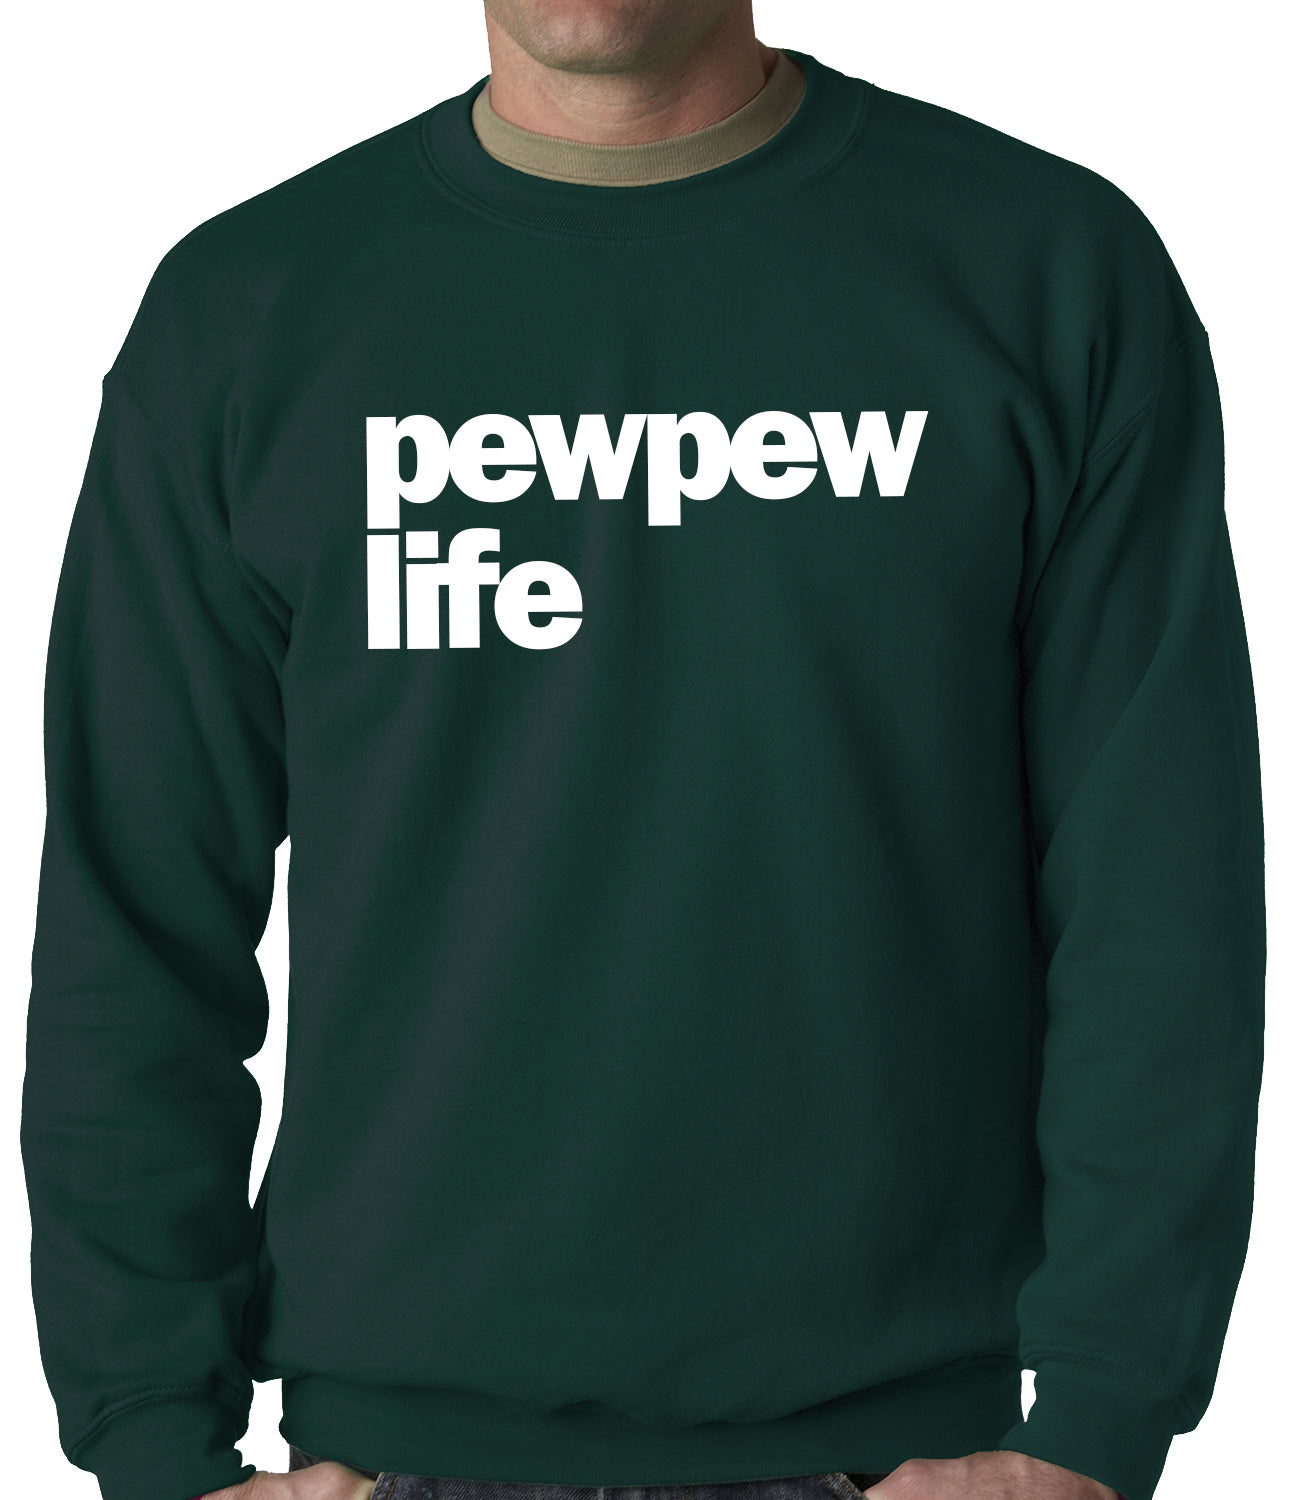 The Pew Pew Life Adult Crewneck